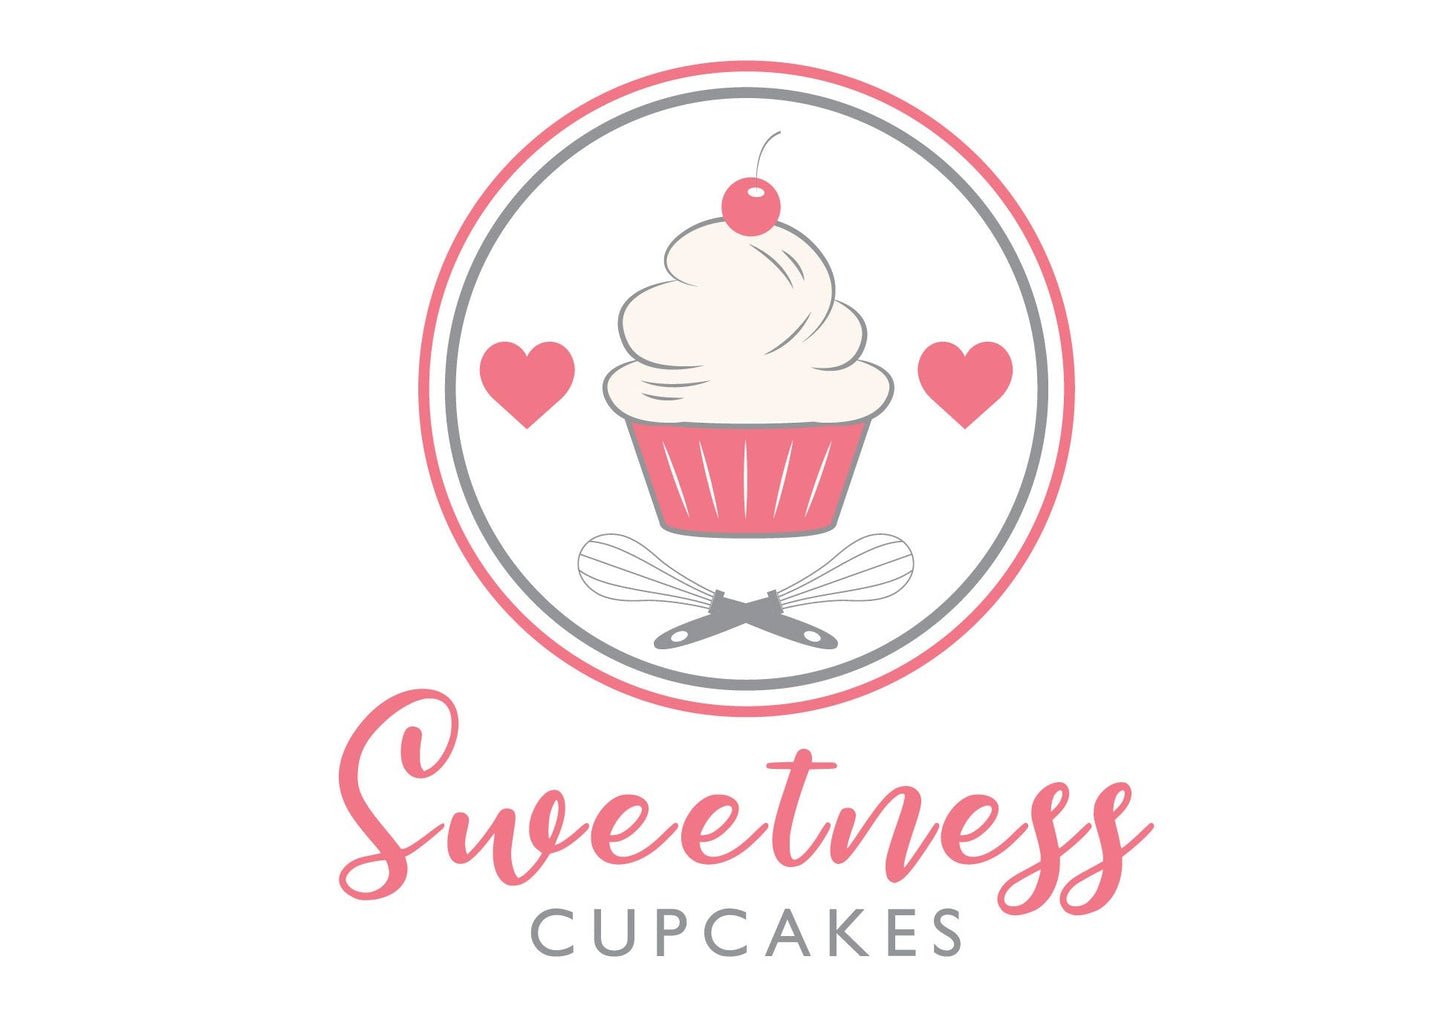 Logo Design | Bakery | Cupcake | Bakery Shop | Baking | Cup Cake | Sweets | Pastry Shop | Pastries | Cupcake Design